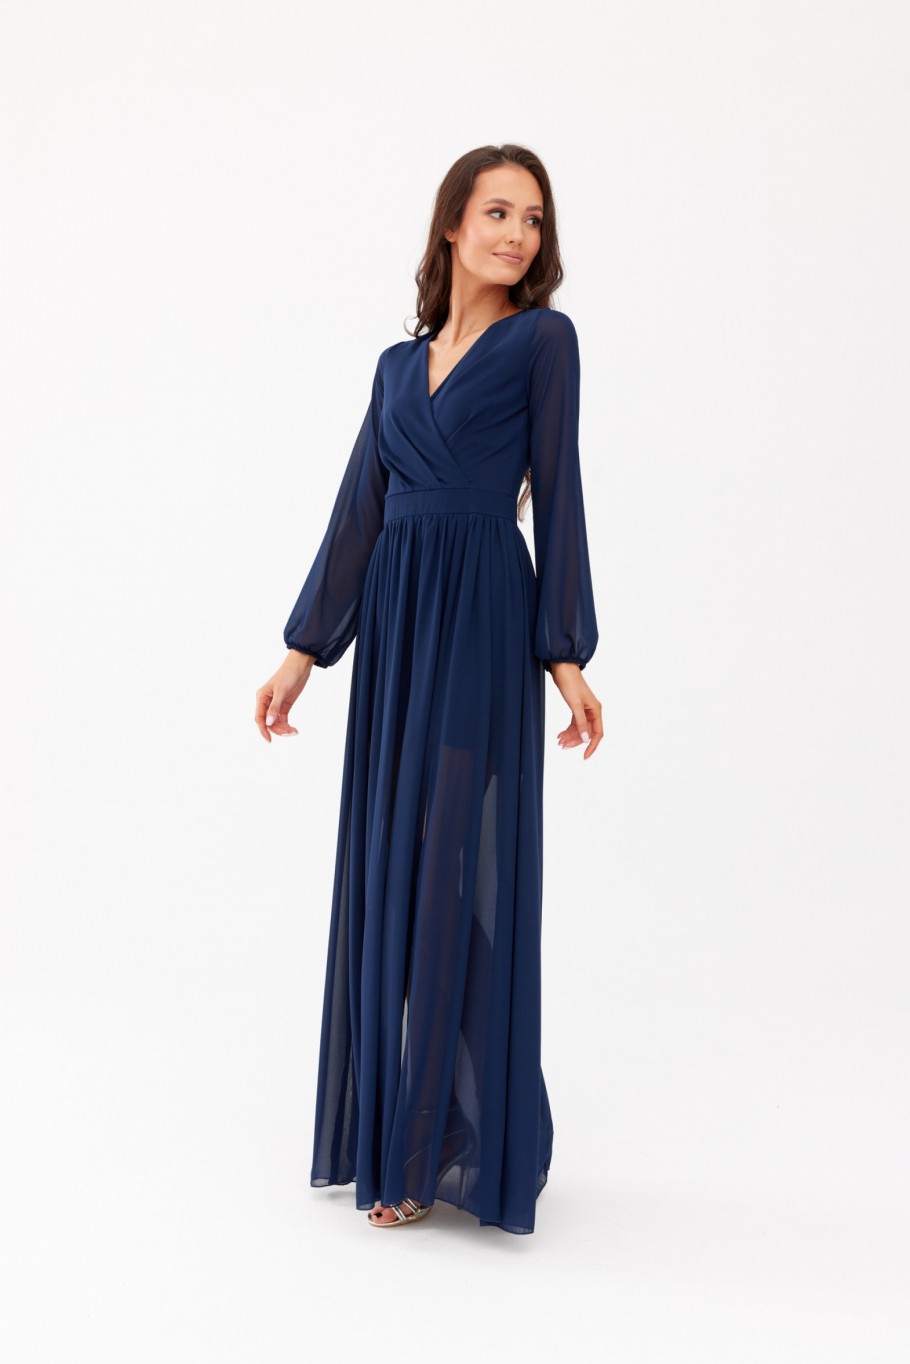 Roco Woman's Dress SUK0421 Navy Blue